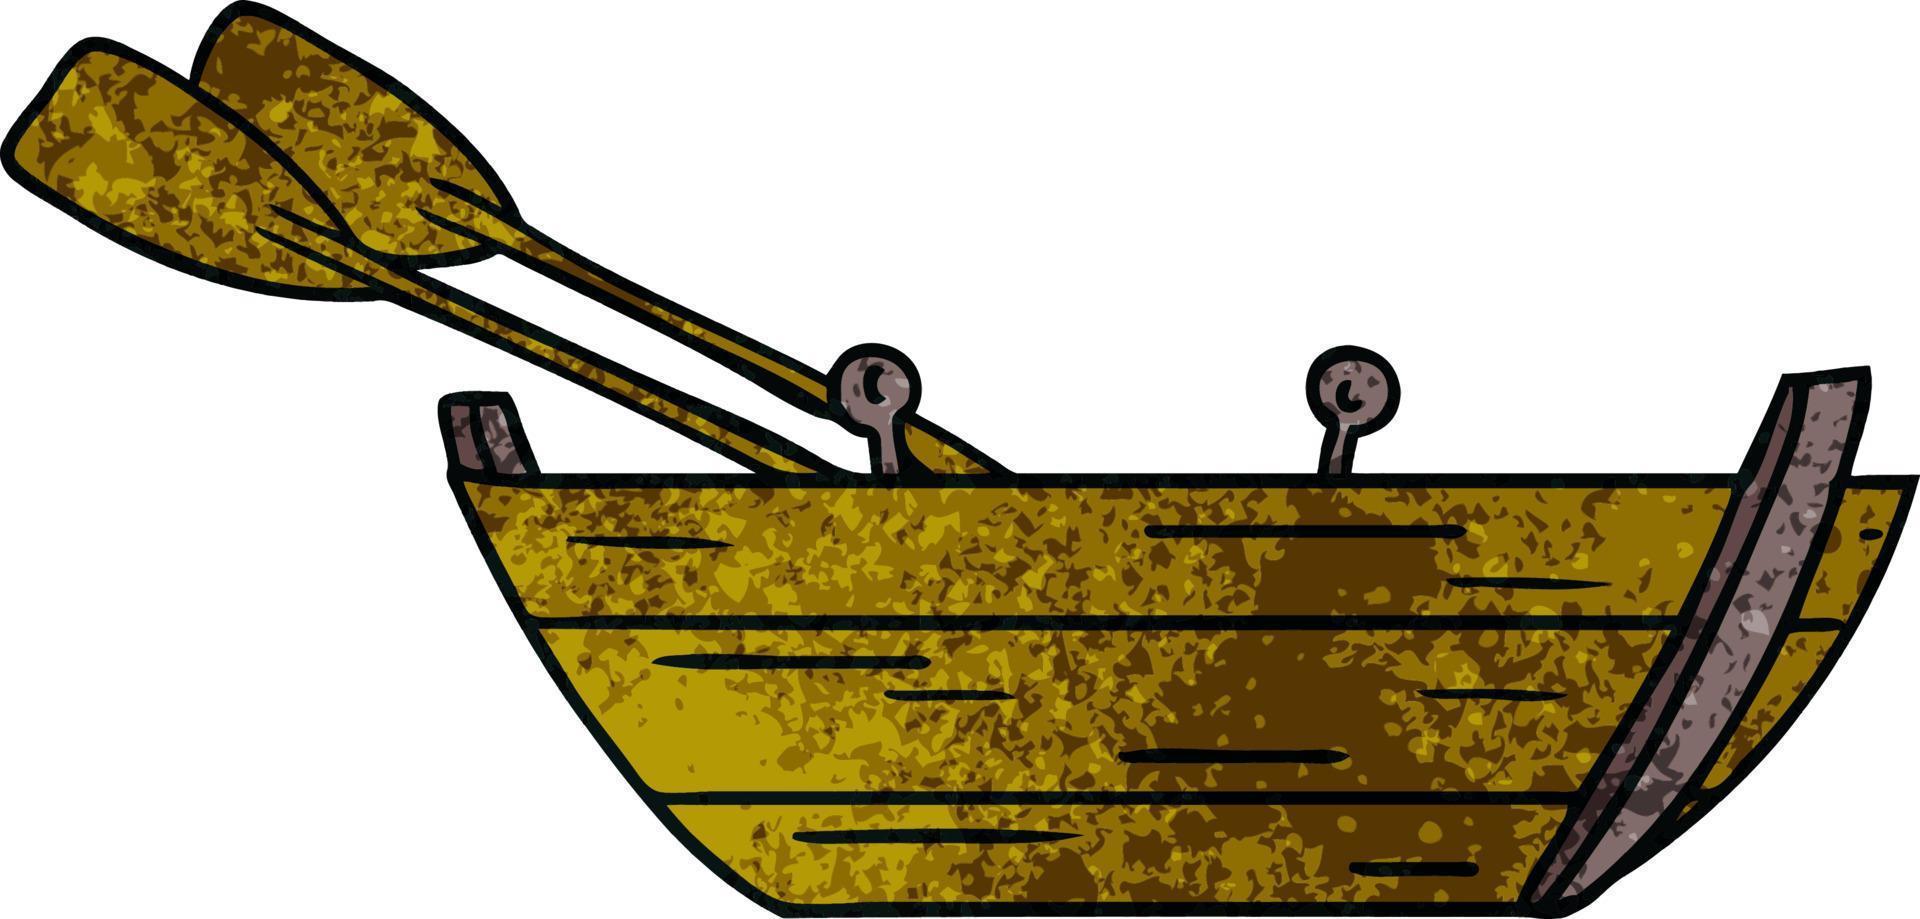 textured cartoon doodle of a wooden row boat vector